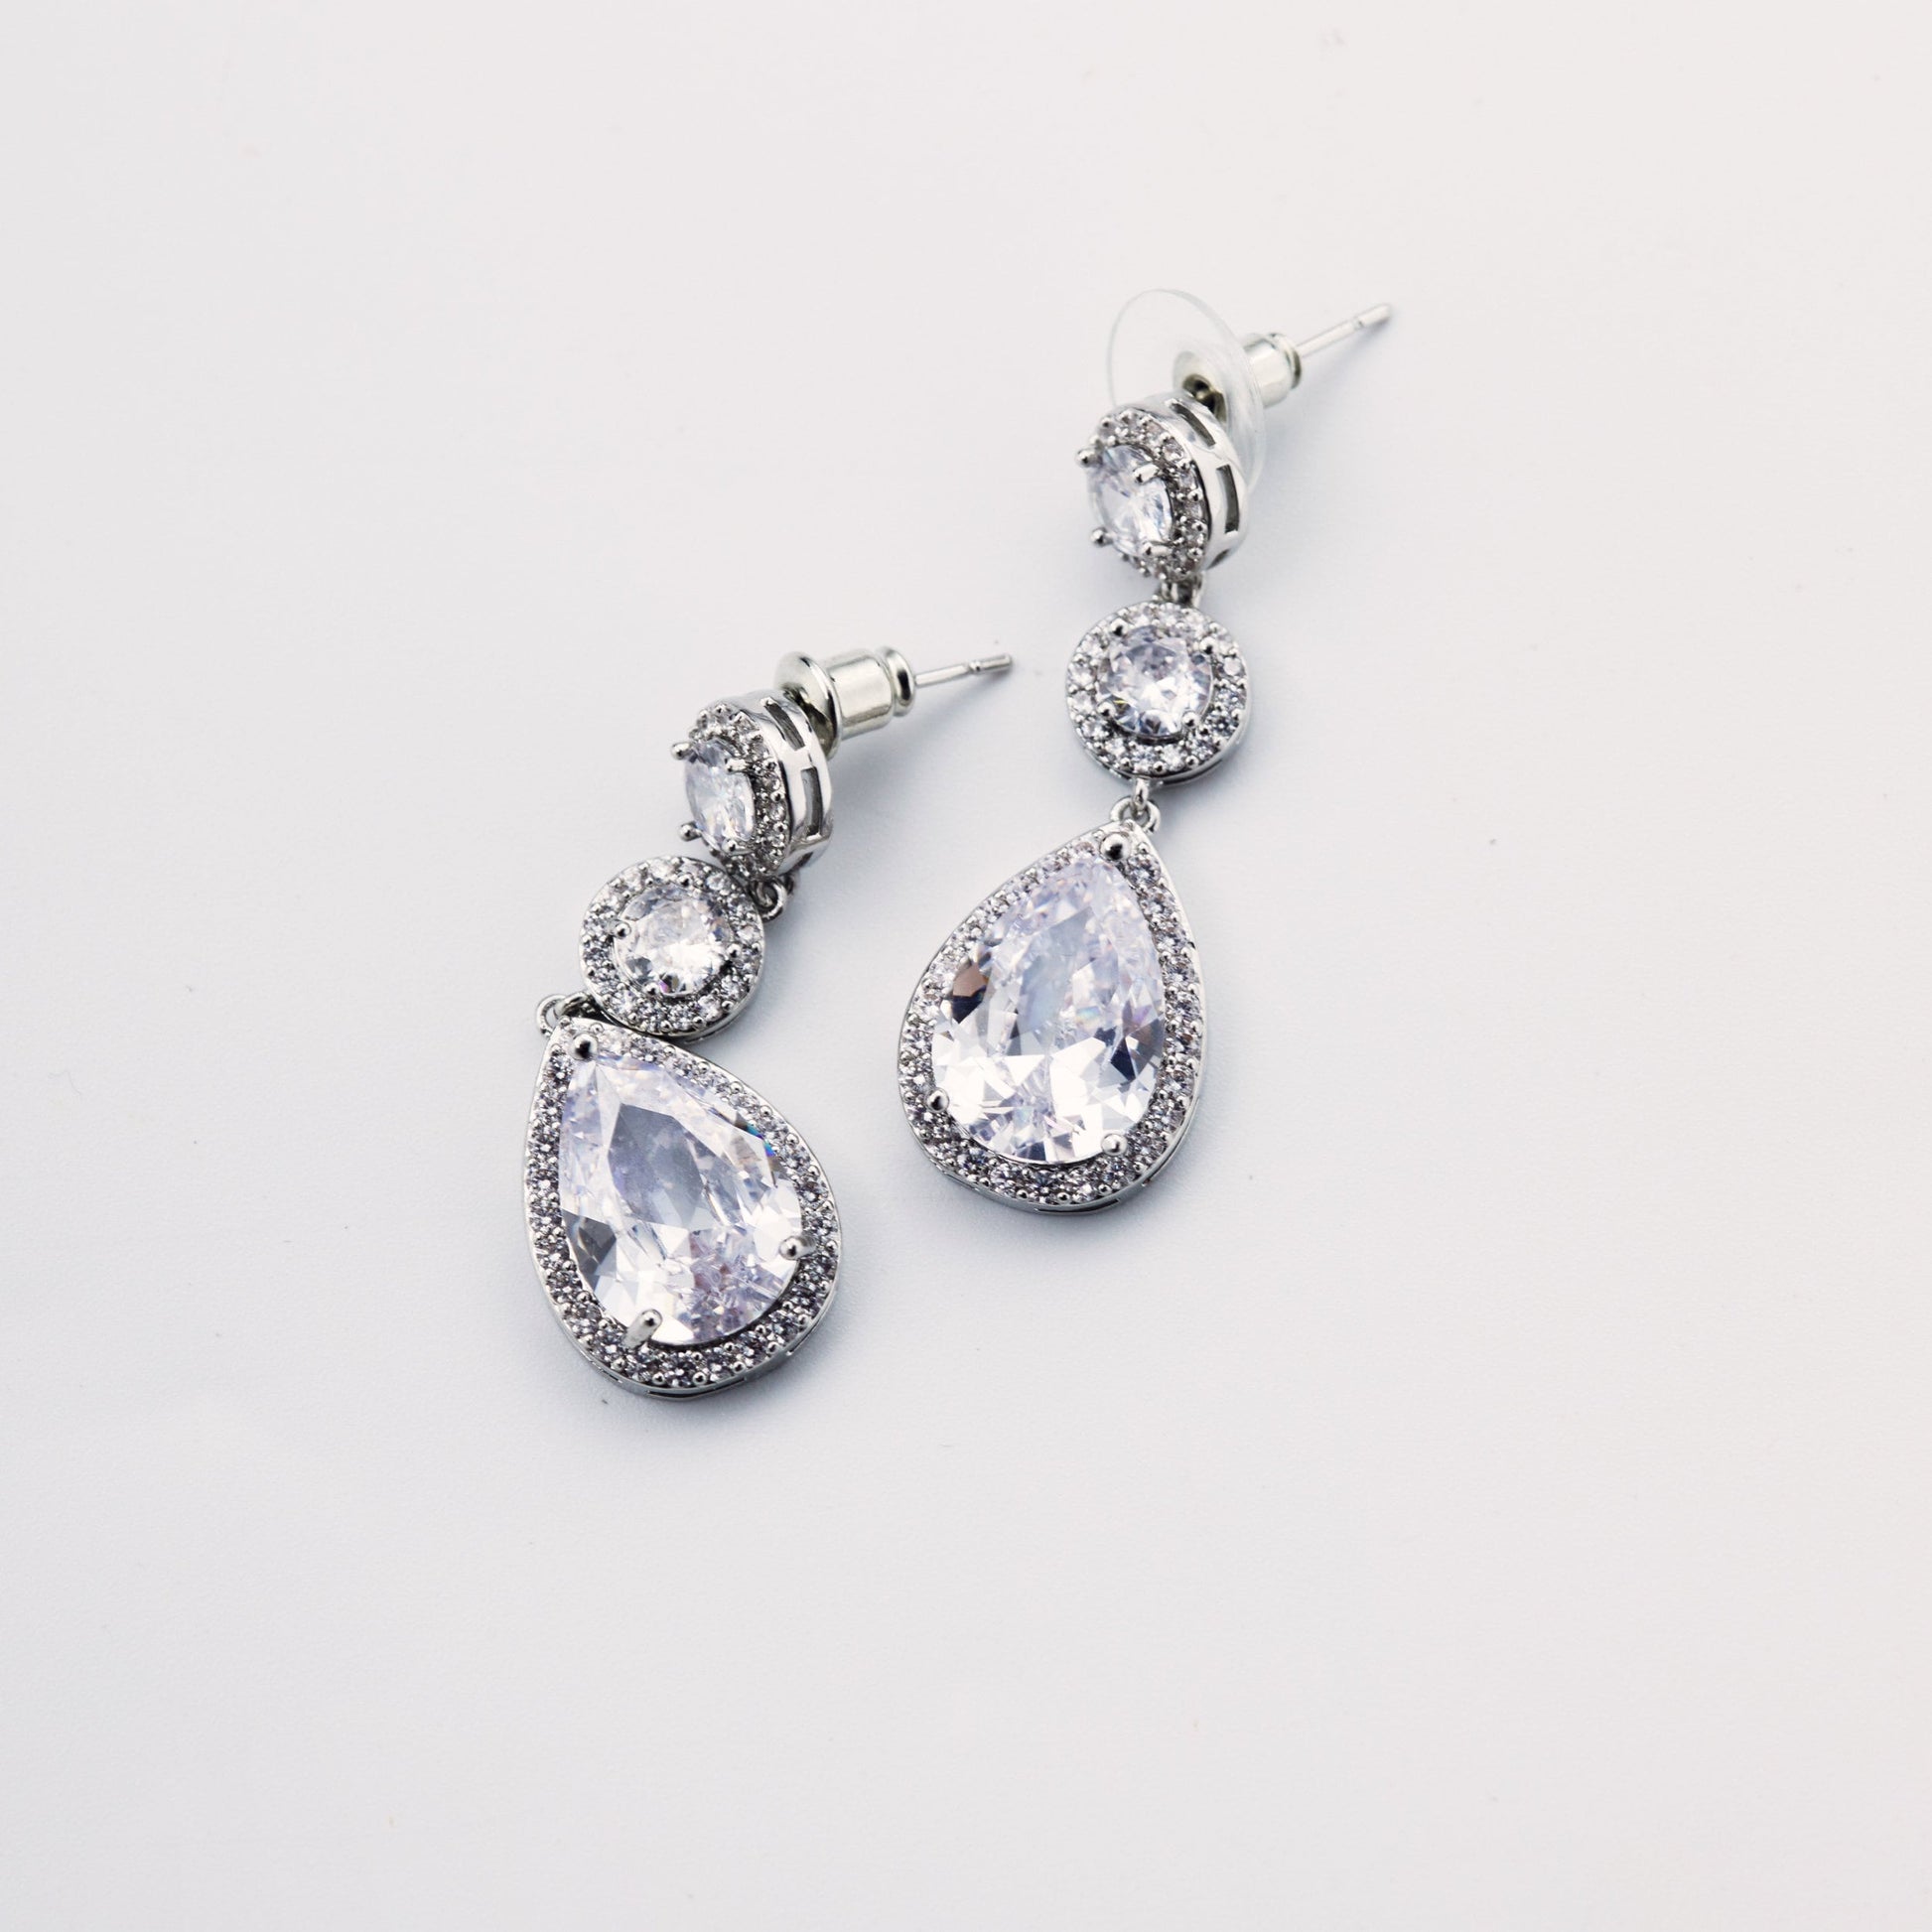 Silver Teardrop Crystal Bridal Earrings.